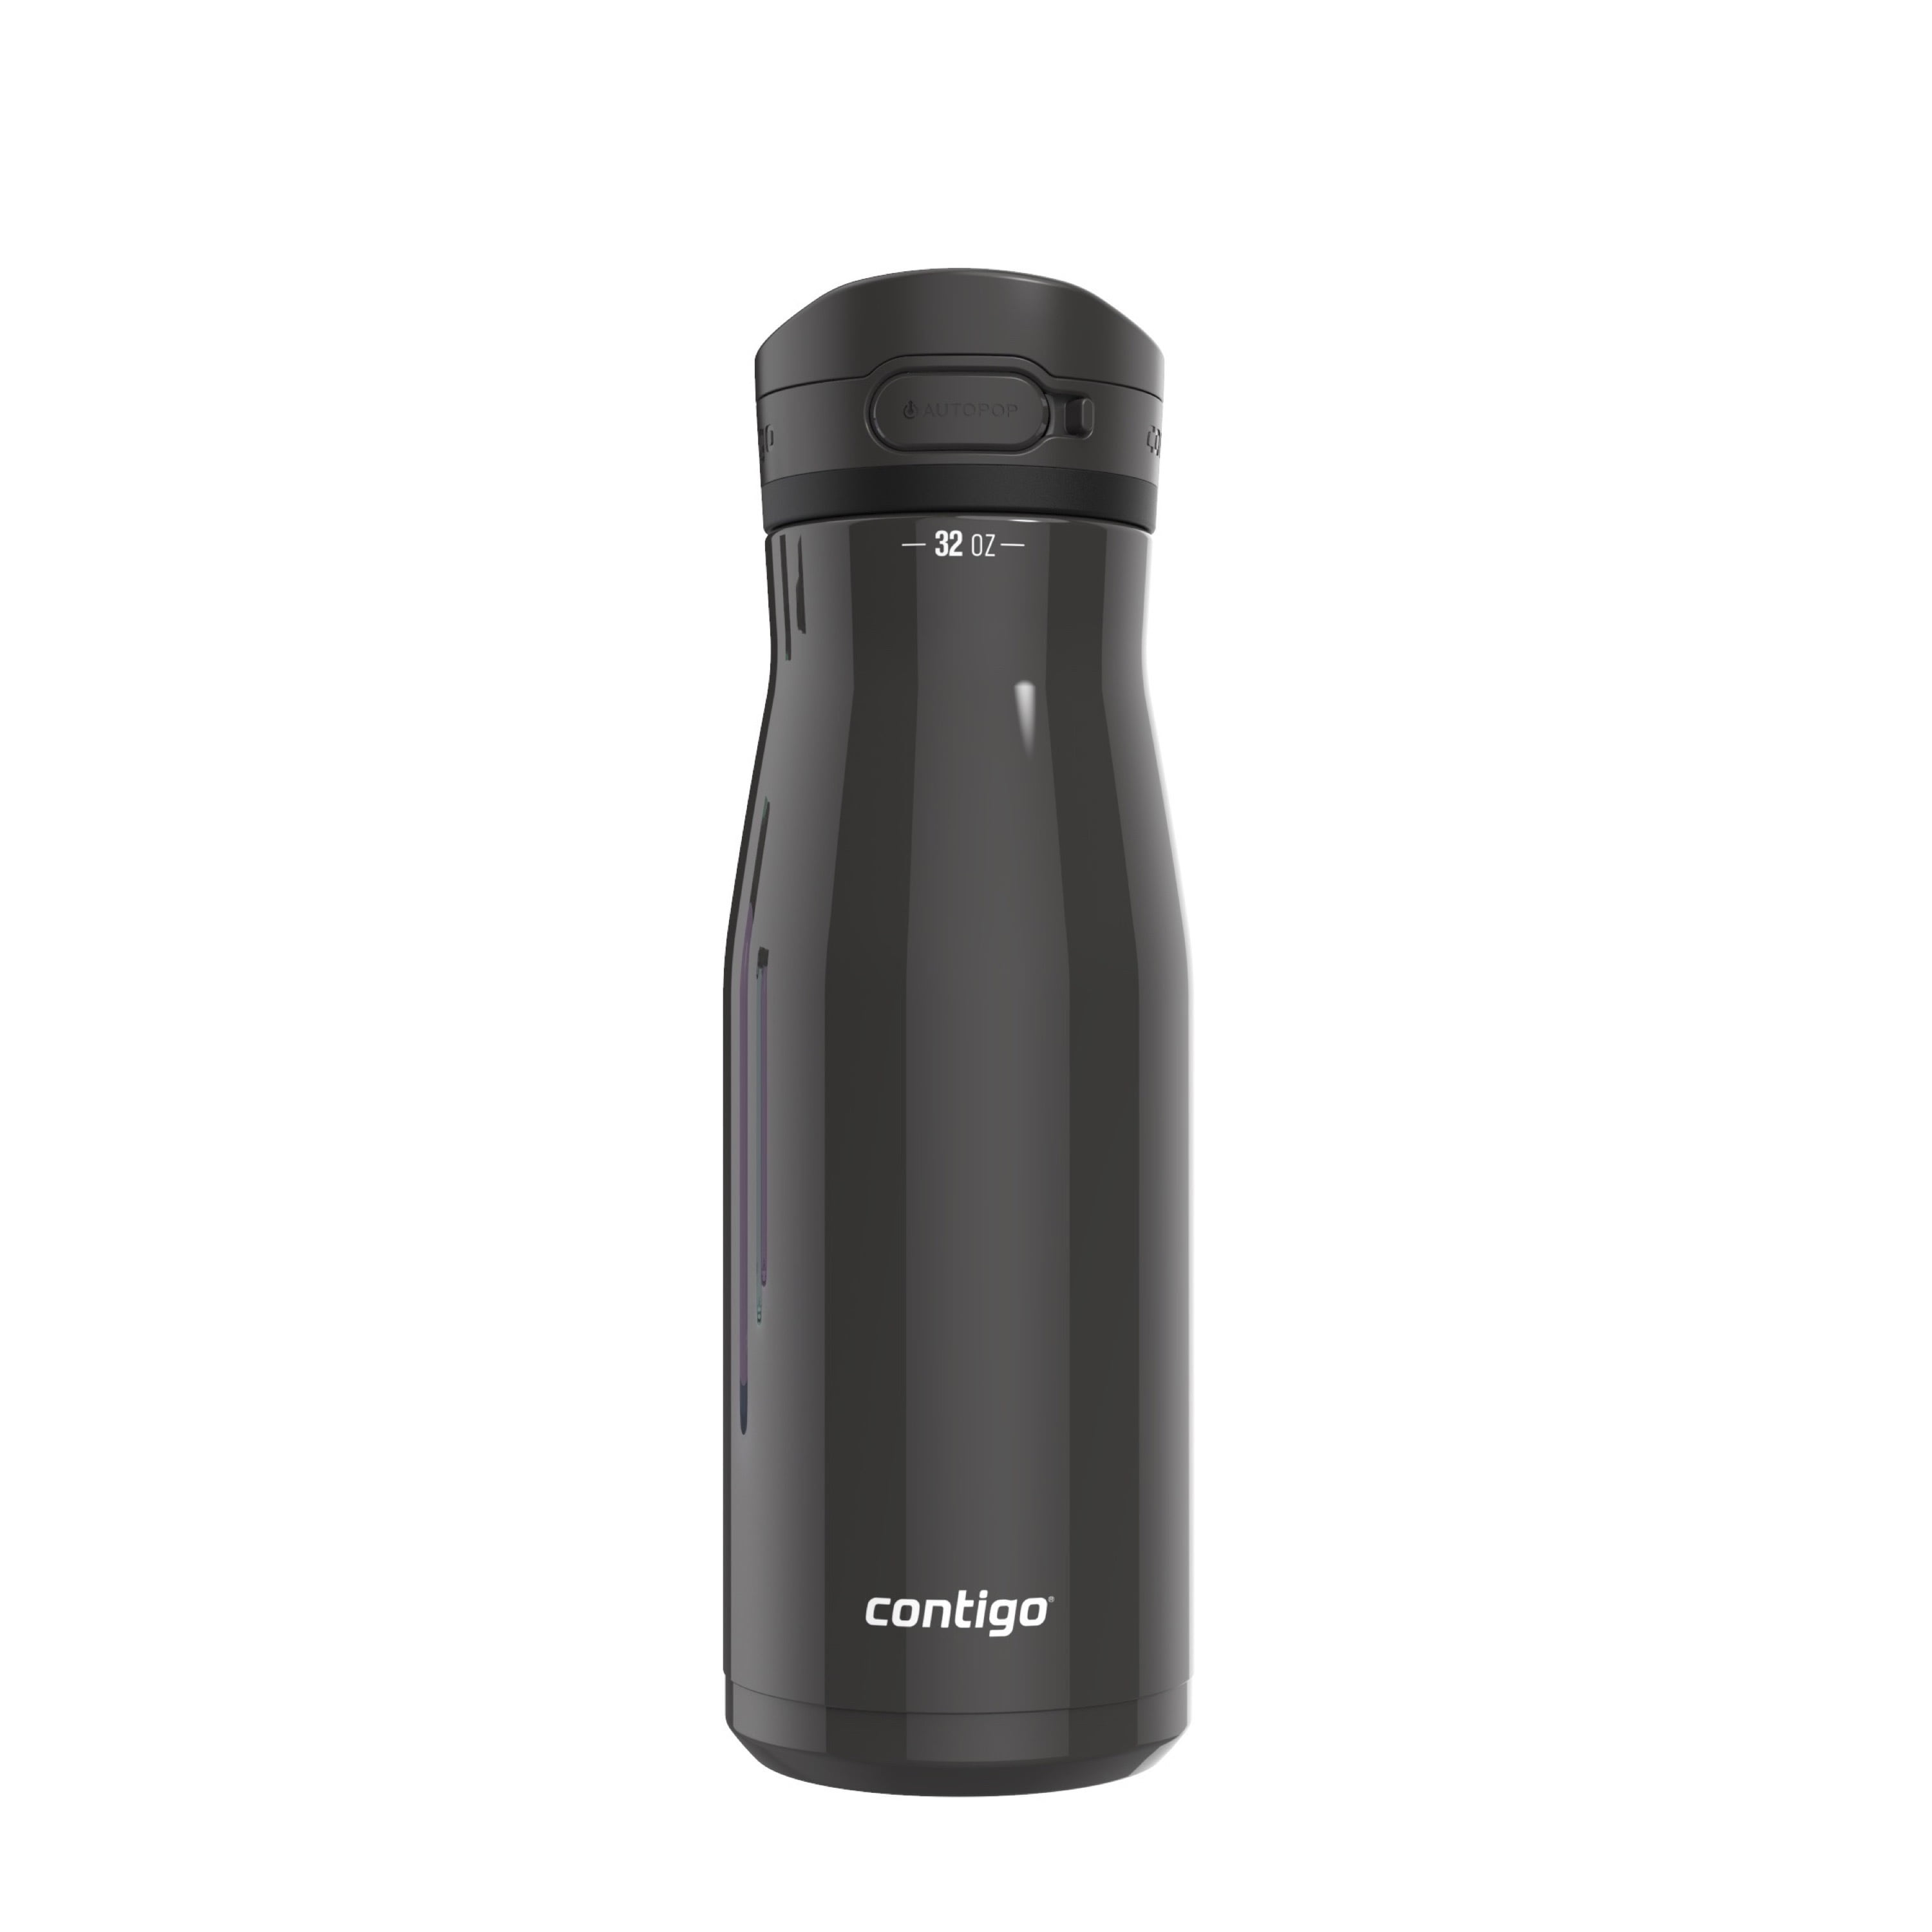 Jackson Chill AUTOPOP™ Vacuum-Insulated Water Bottle, 590 ml